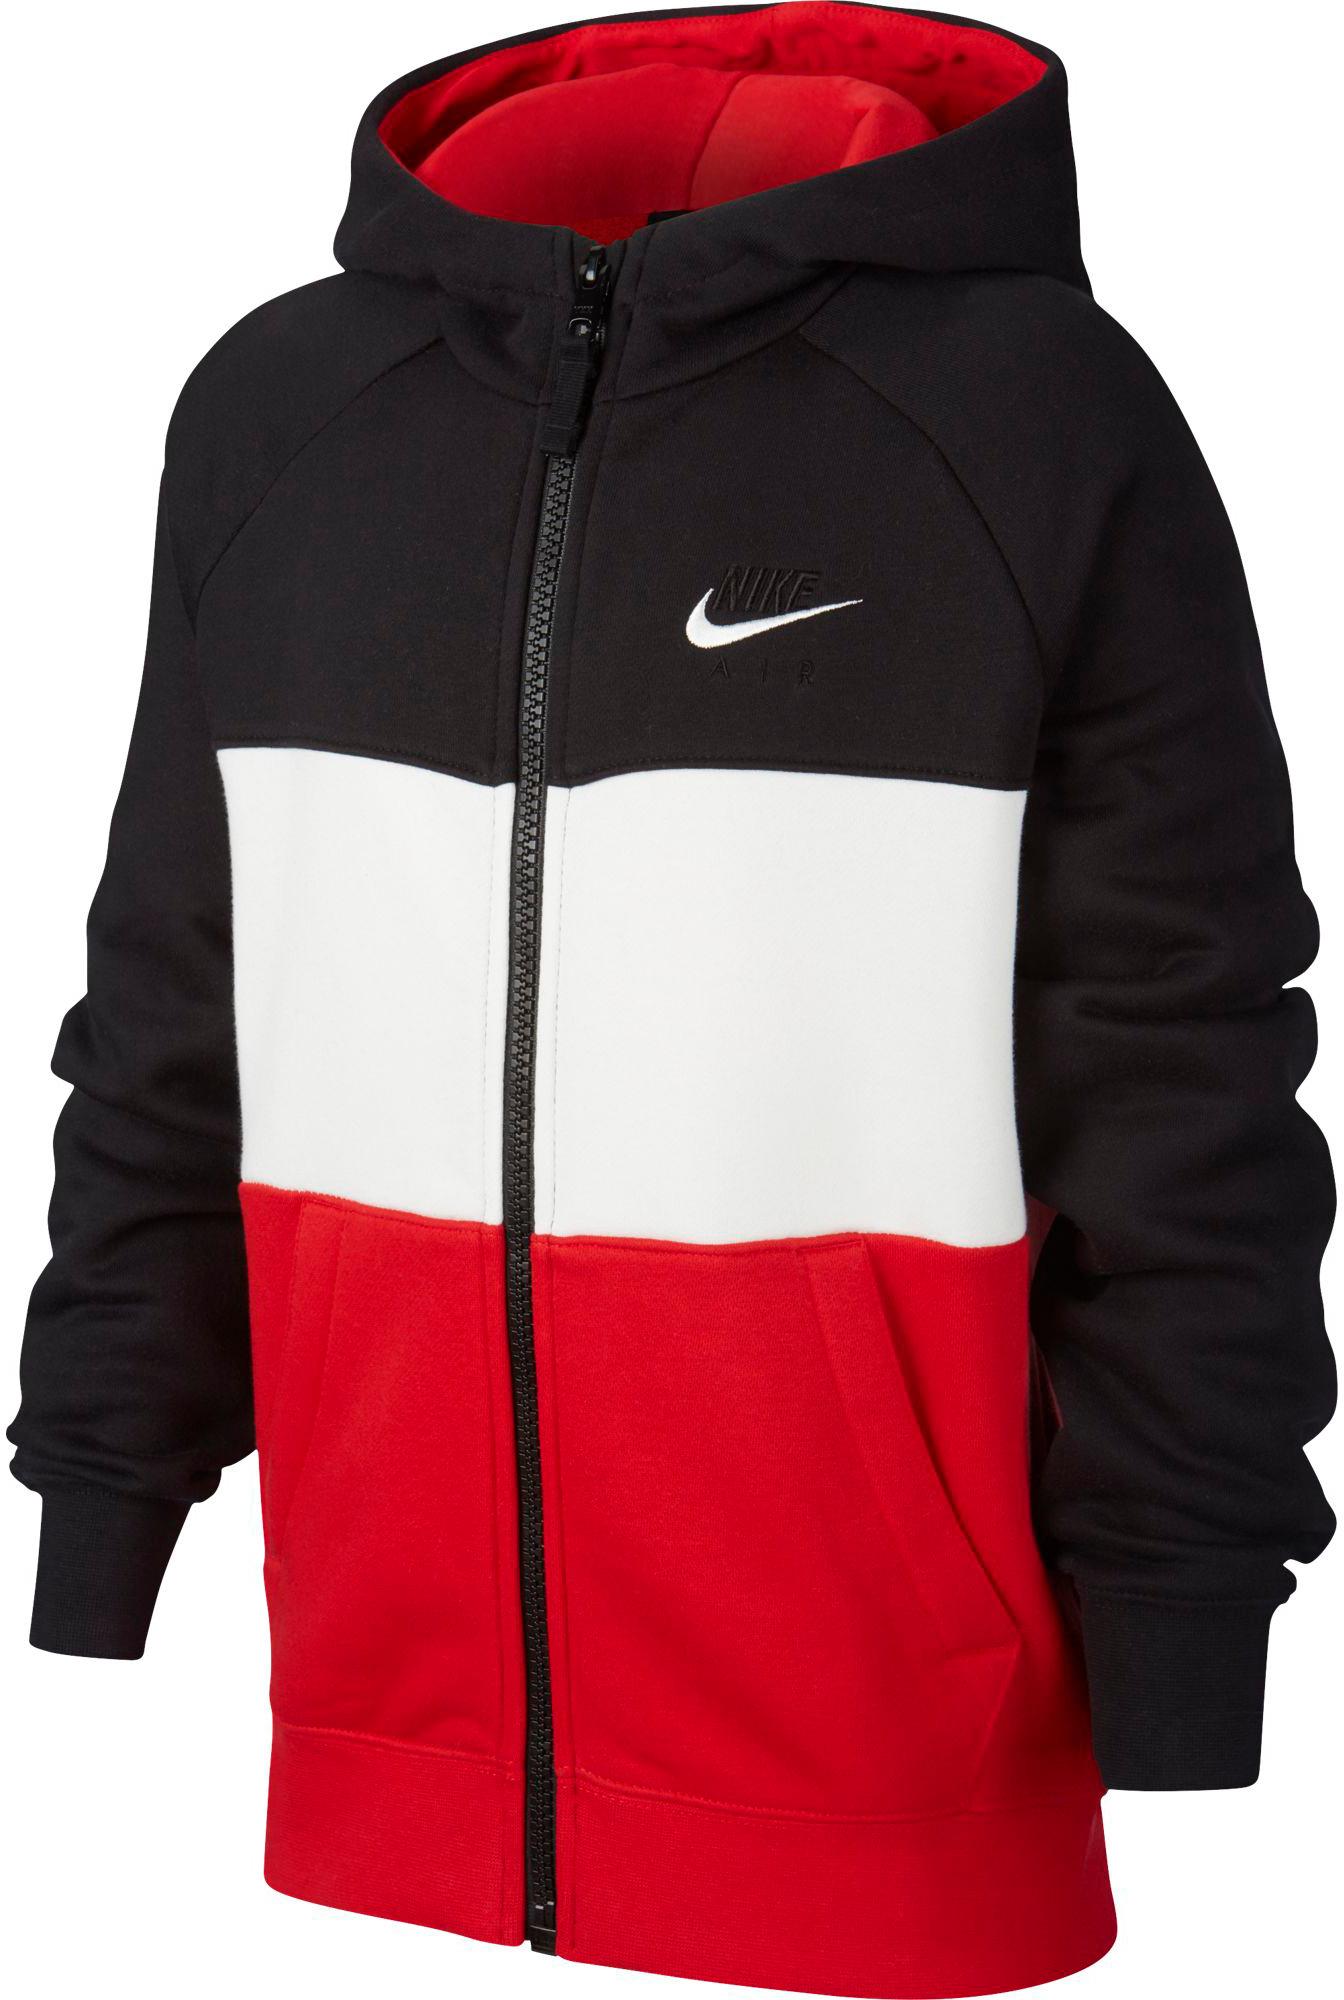 nike air red black and white hoodie